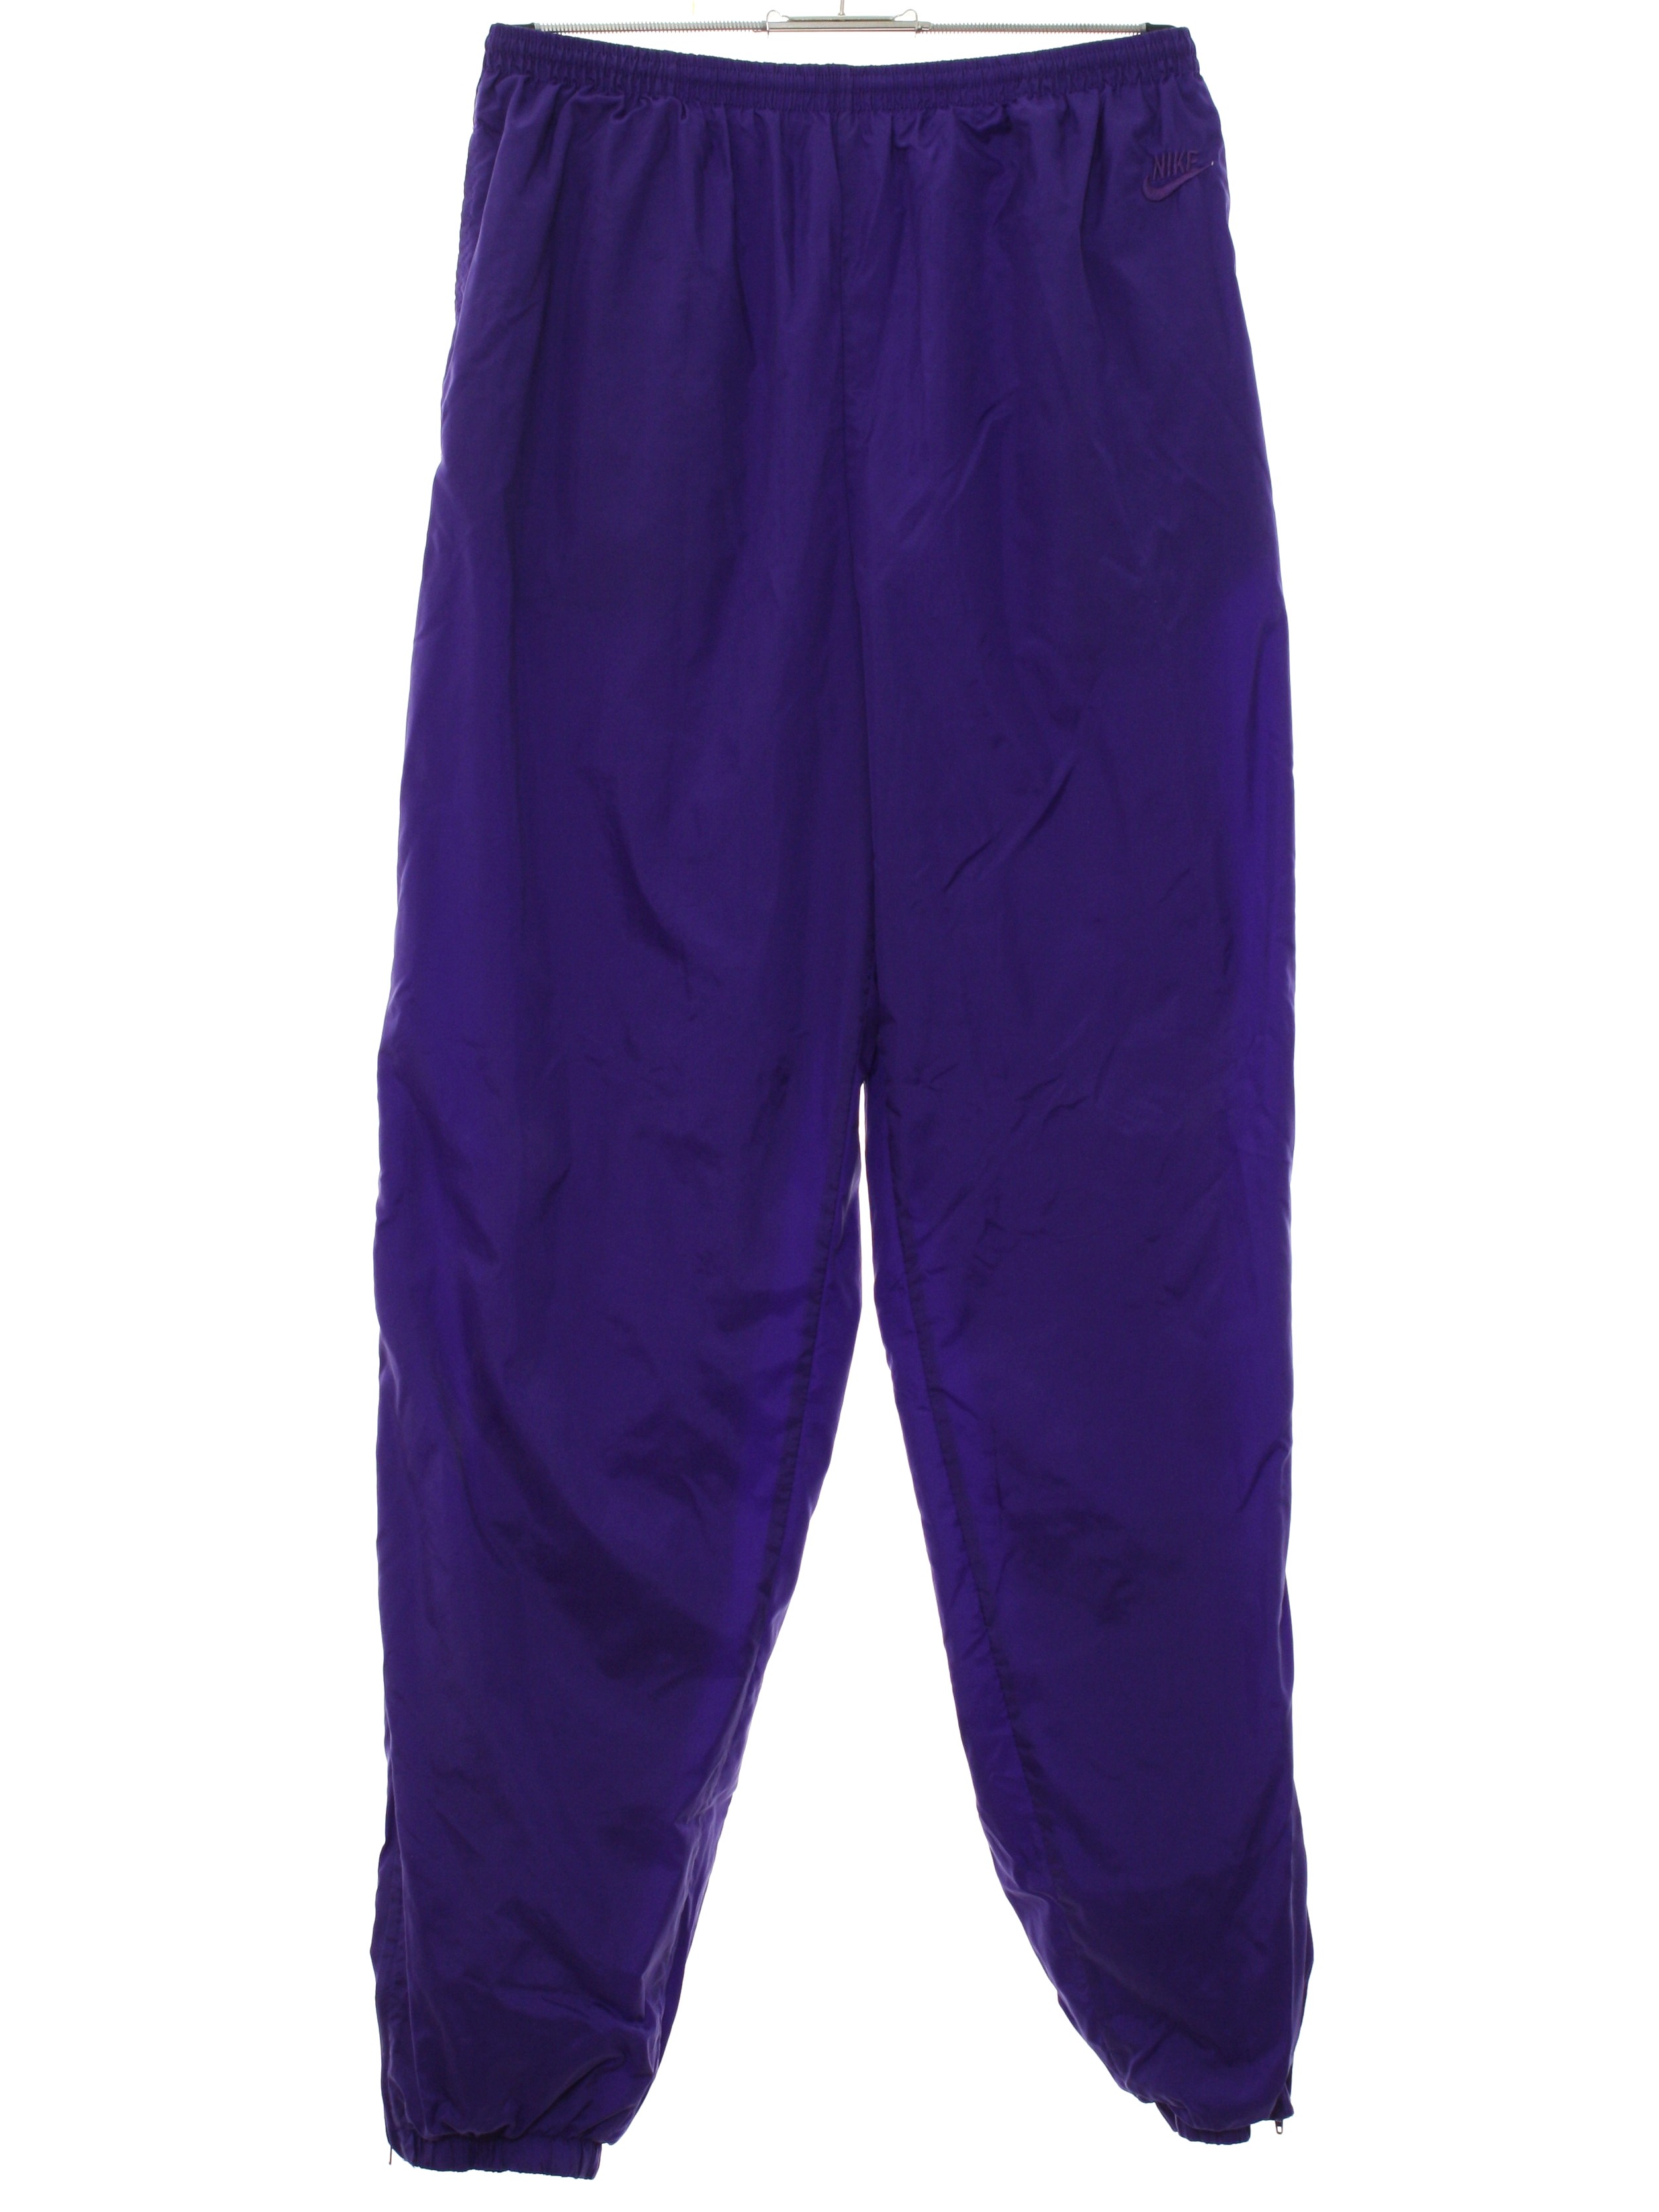 Retro 1980's Pants (Nike) : Late 80s -Nike- Unisex purple background ...